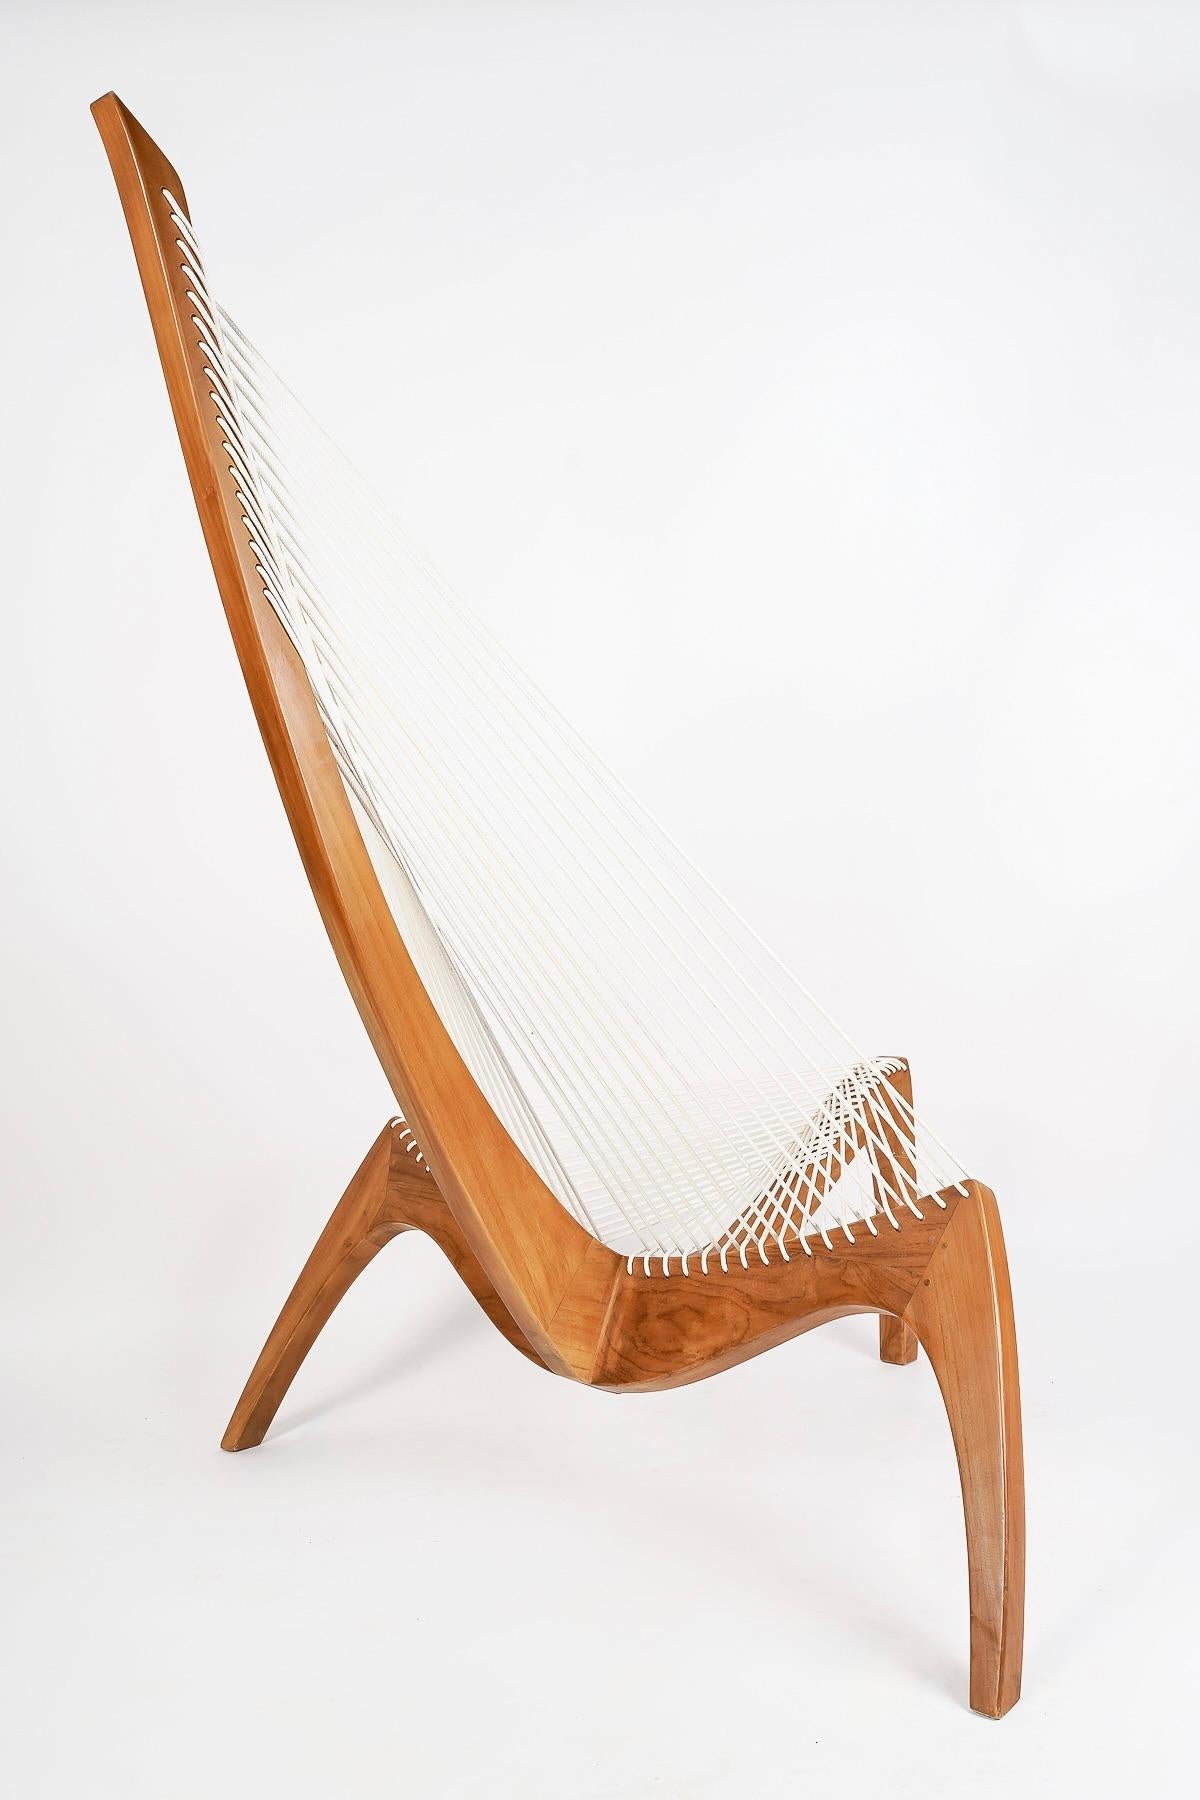 1970 Paire de chaises harpe par Jørgen Høvelskov pour Christensen & Larsen Møbelhandværk. 2